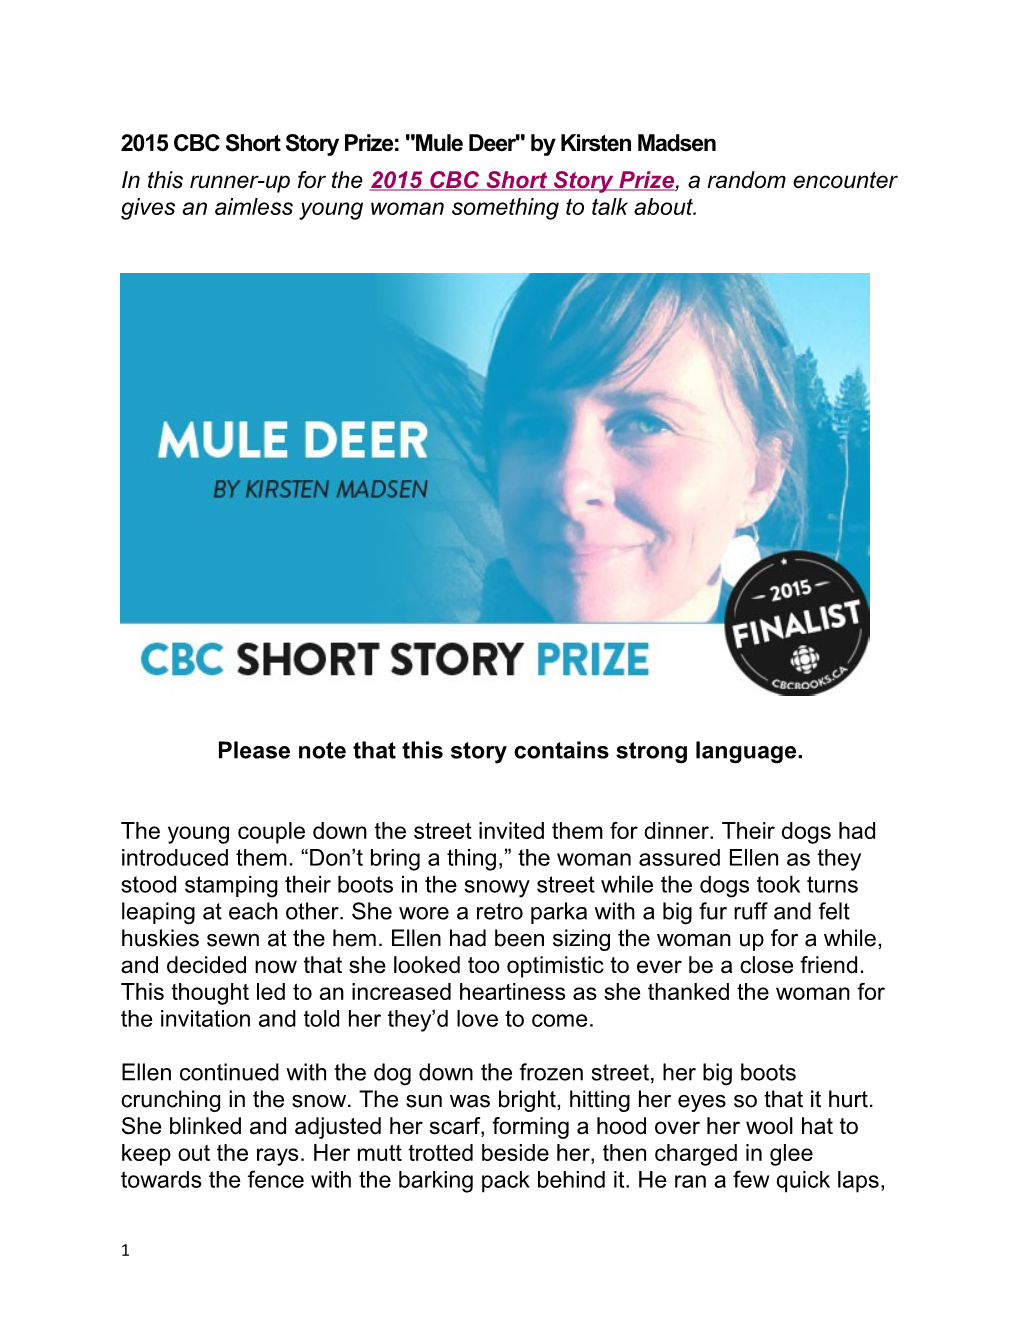 2015 CBC Short Story Prize: Mule Deer by Kirsten Madsen